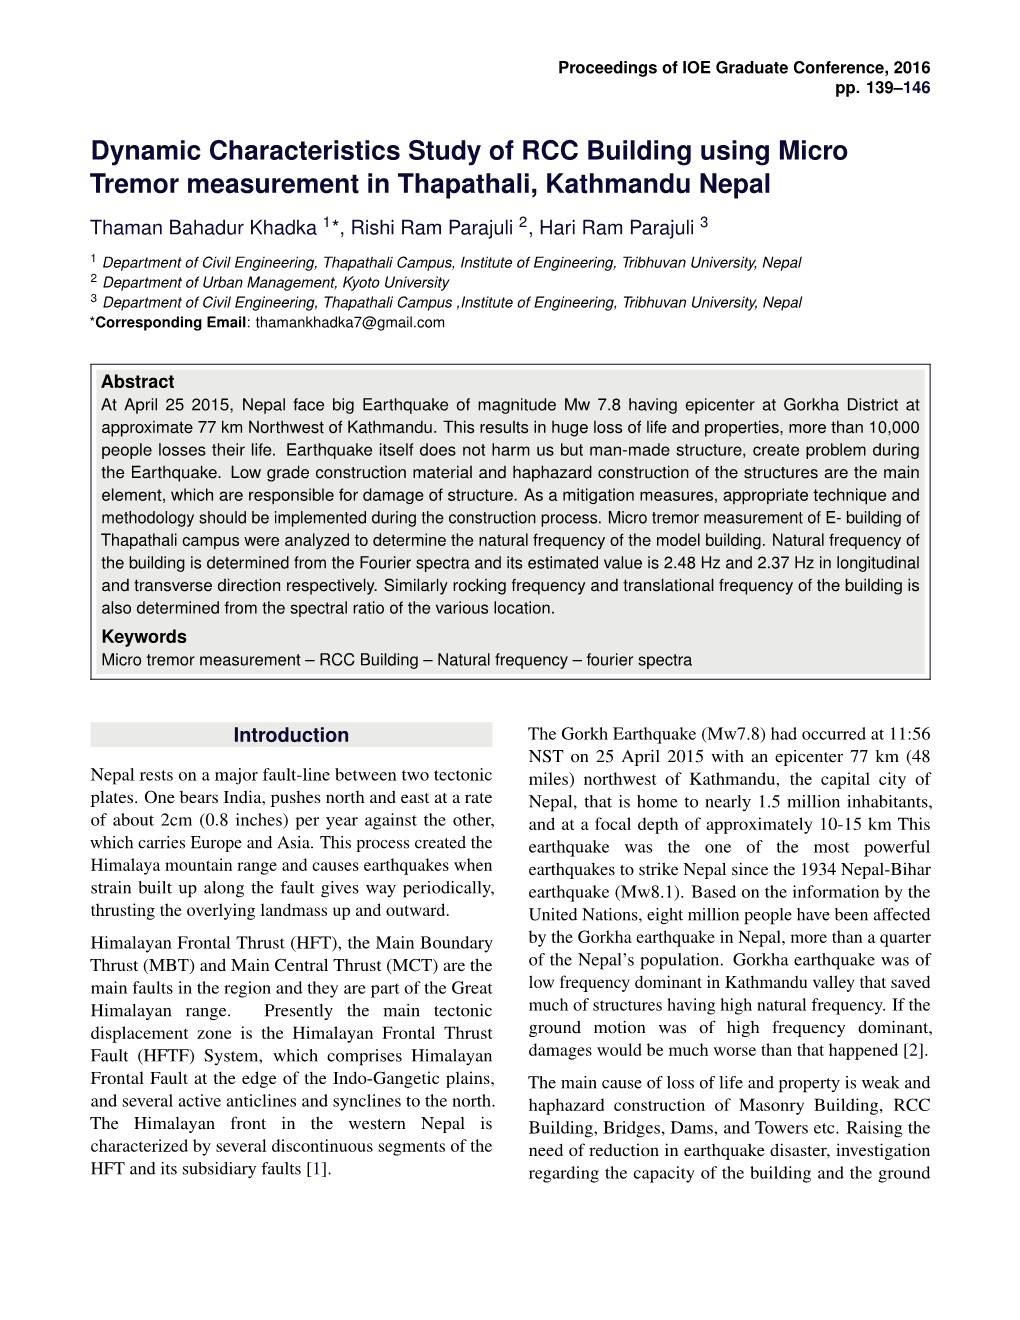 Dynamic Characteristics Study of RCC Building Using Micro Tremor Measurement in Thapathali, Kathmandu Nepal